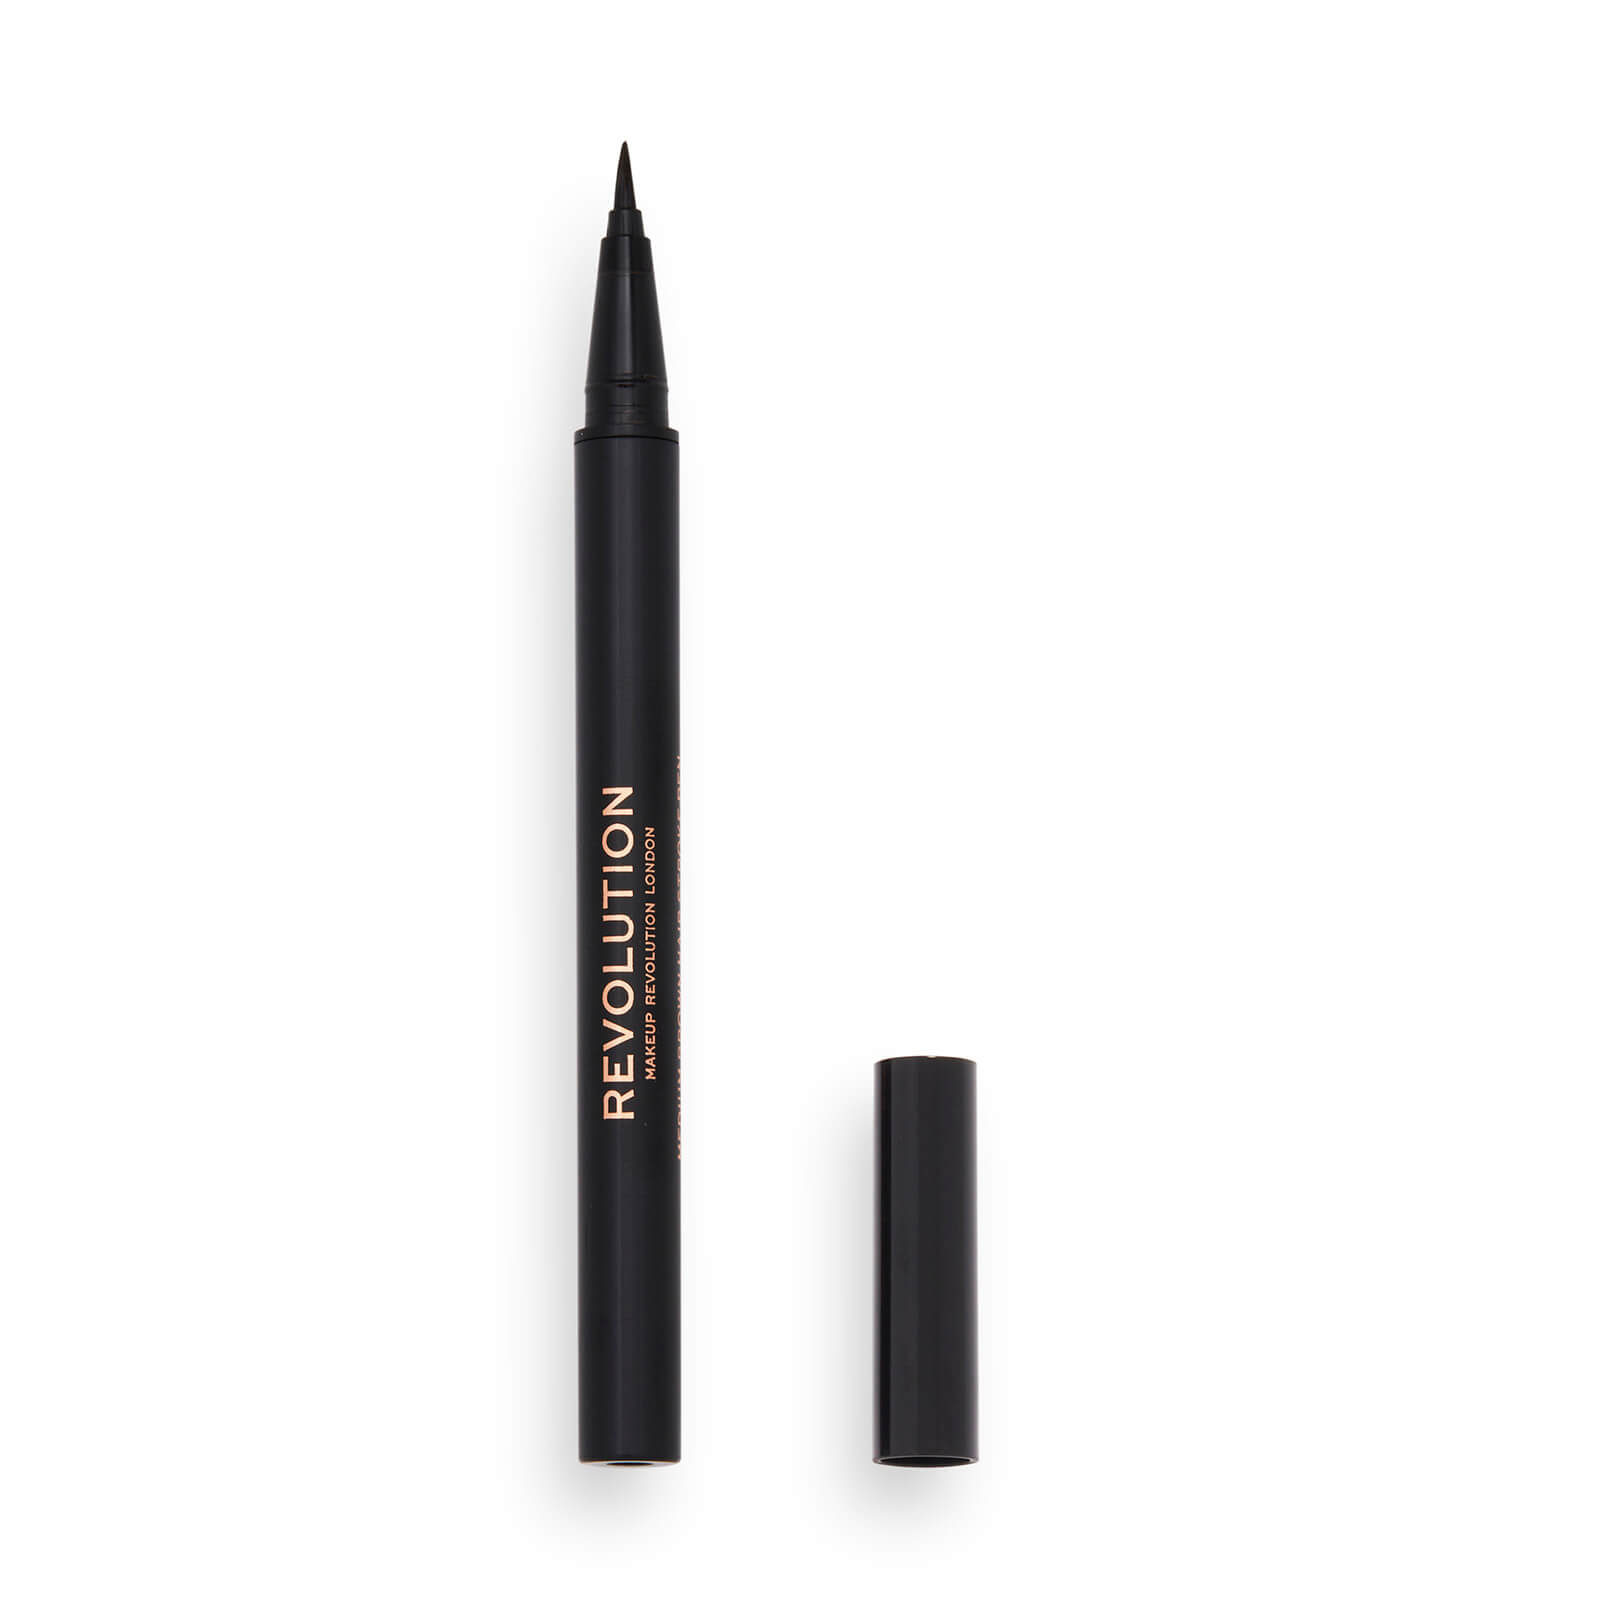 Makeup Revolution Hair Stroke Brow Pen 0.5ml (Various Shades) - Dark Brown